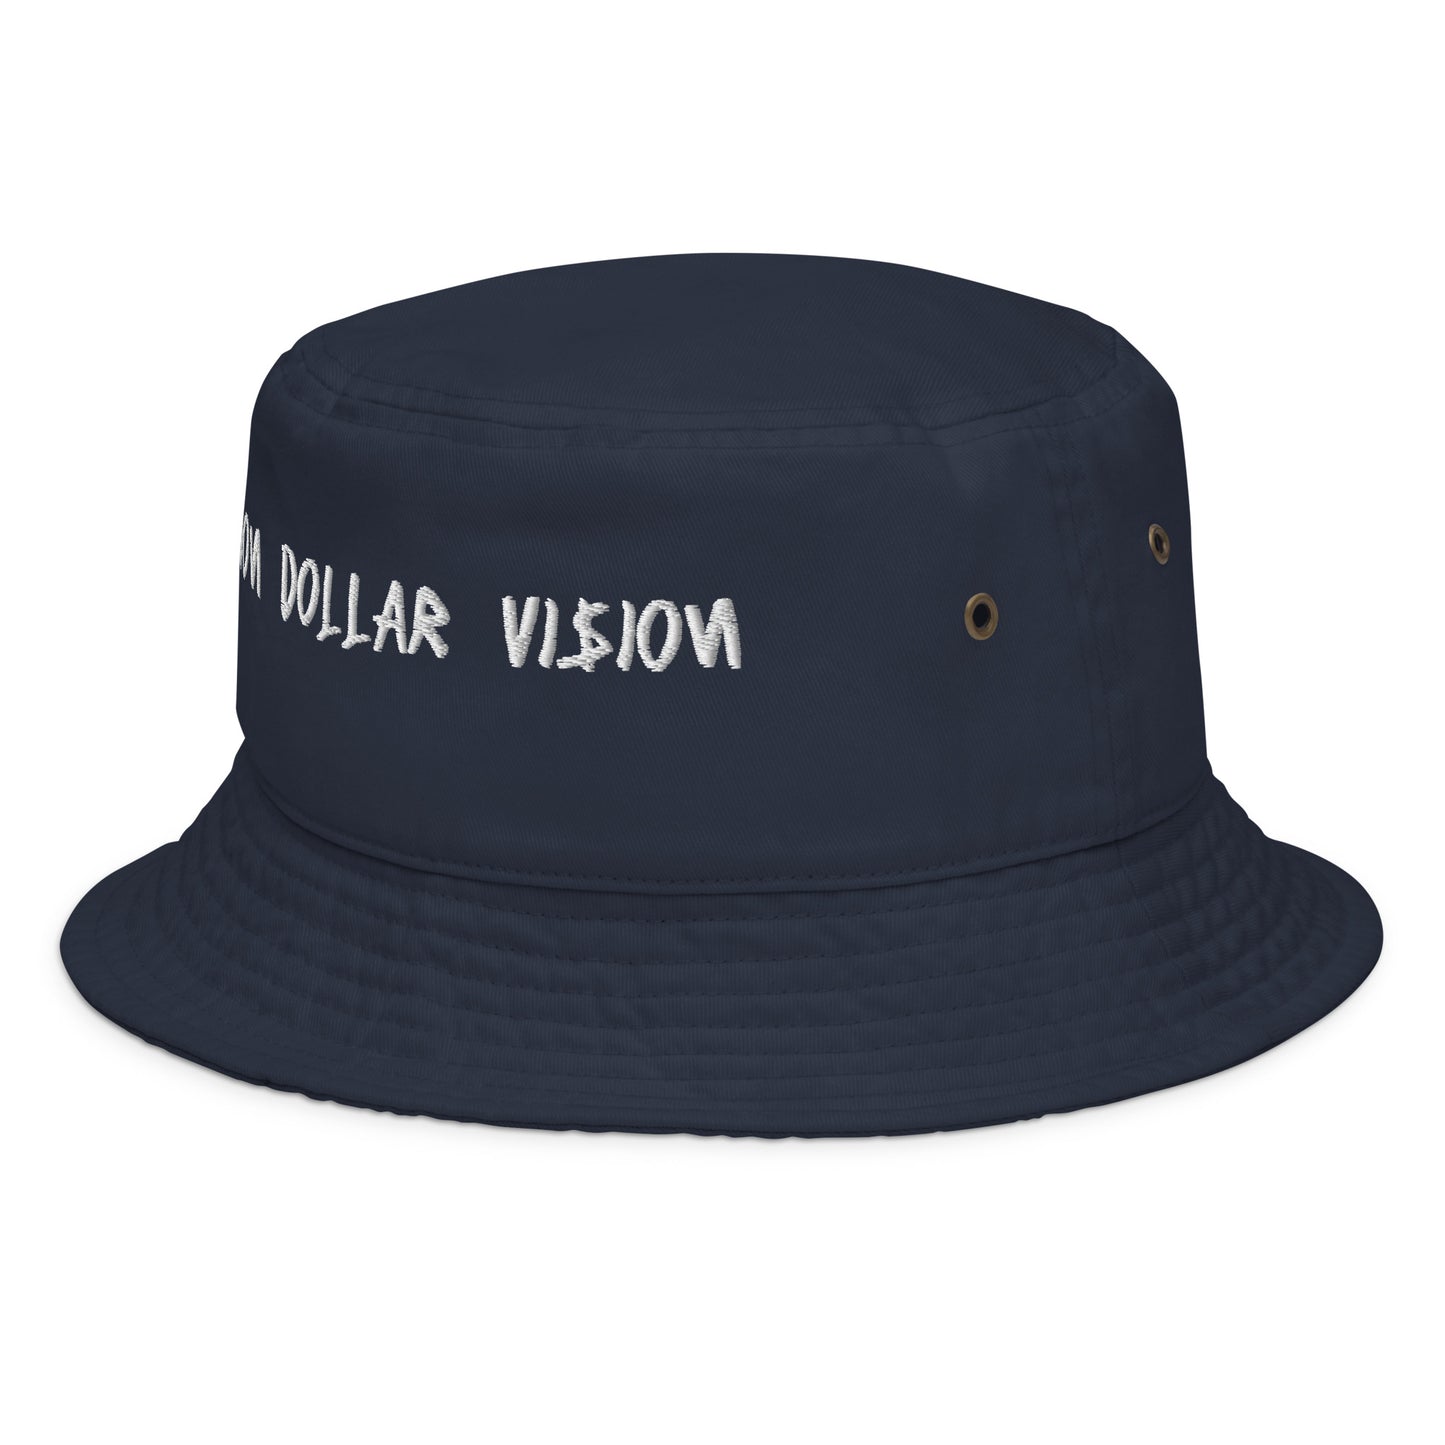 Million Dollar Vision bucket hat